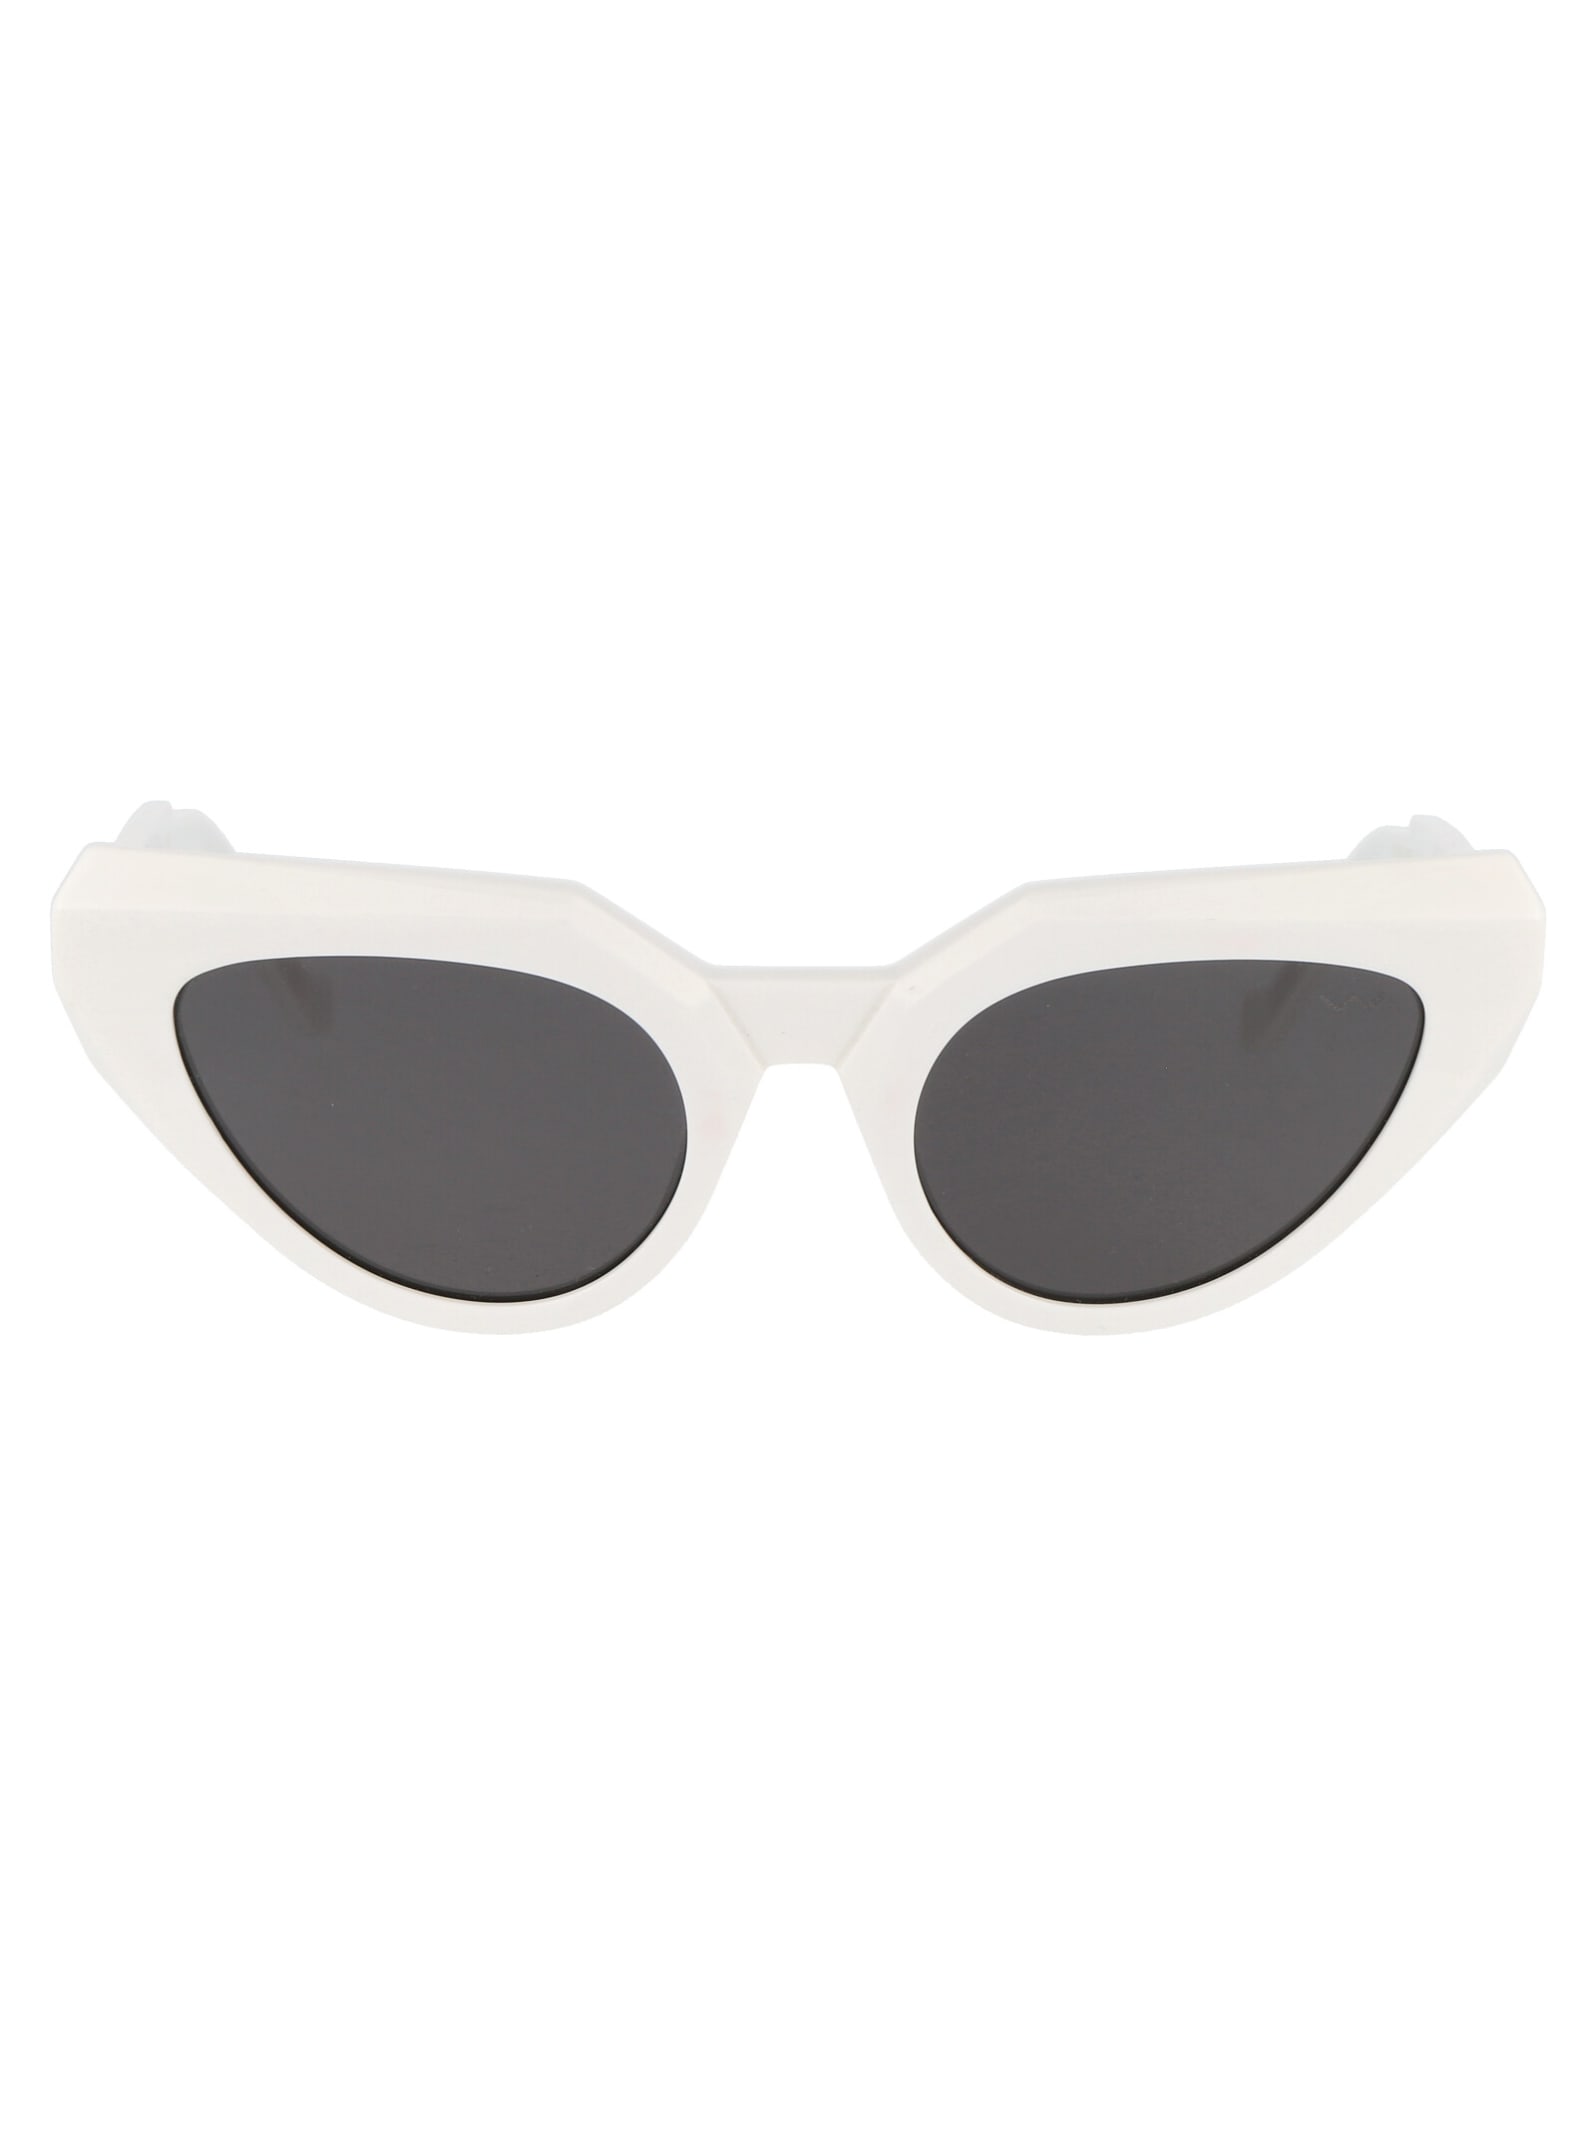 Bl0028 Sunglasses